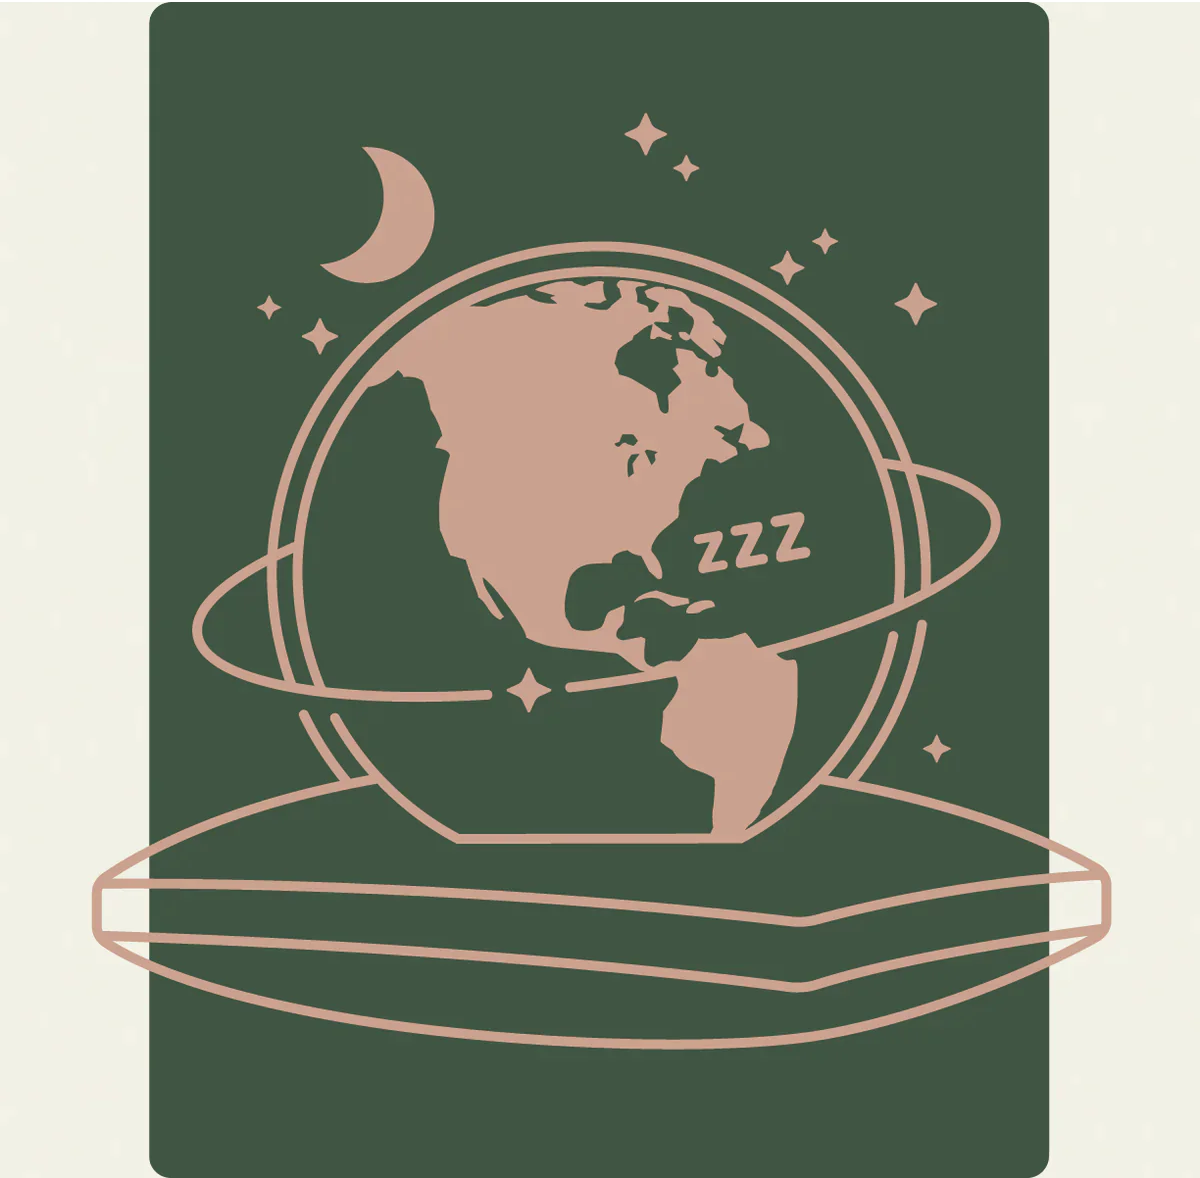 Illustration of world globe resting on pillow at night